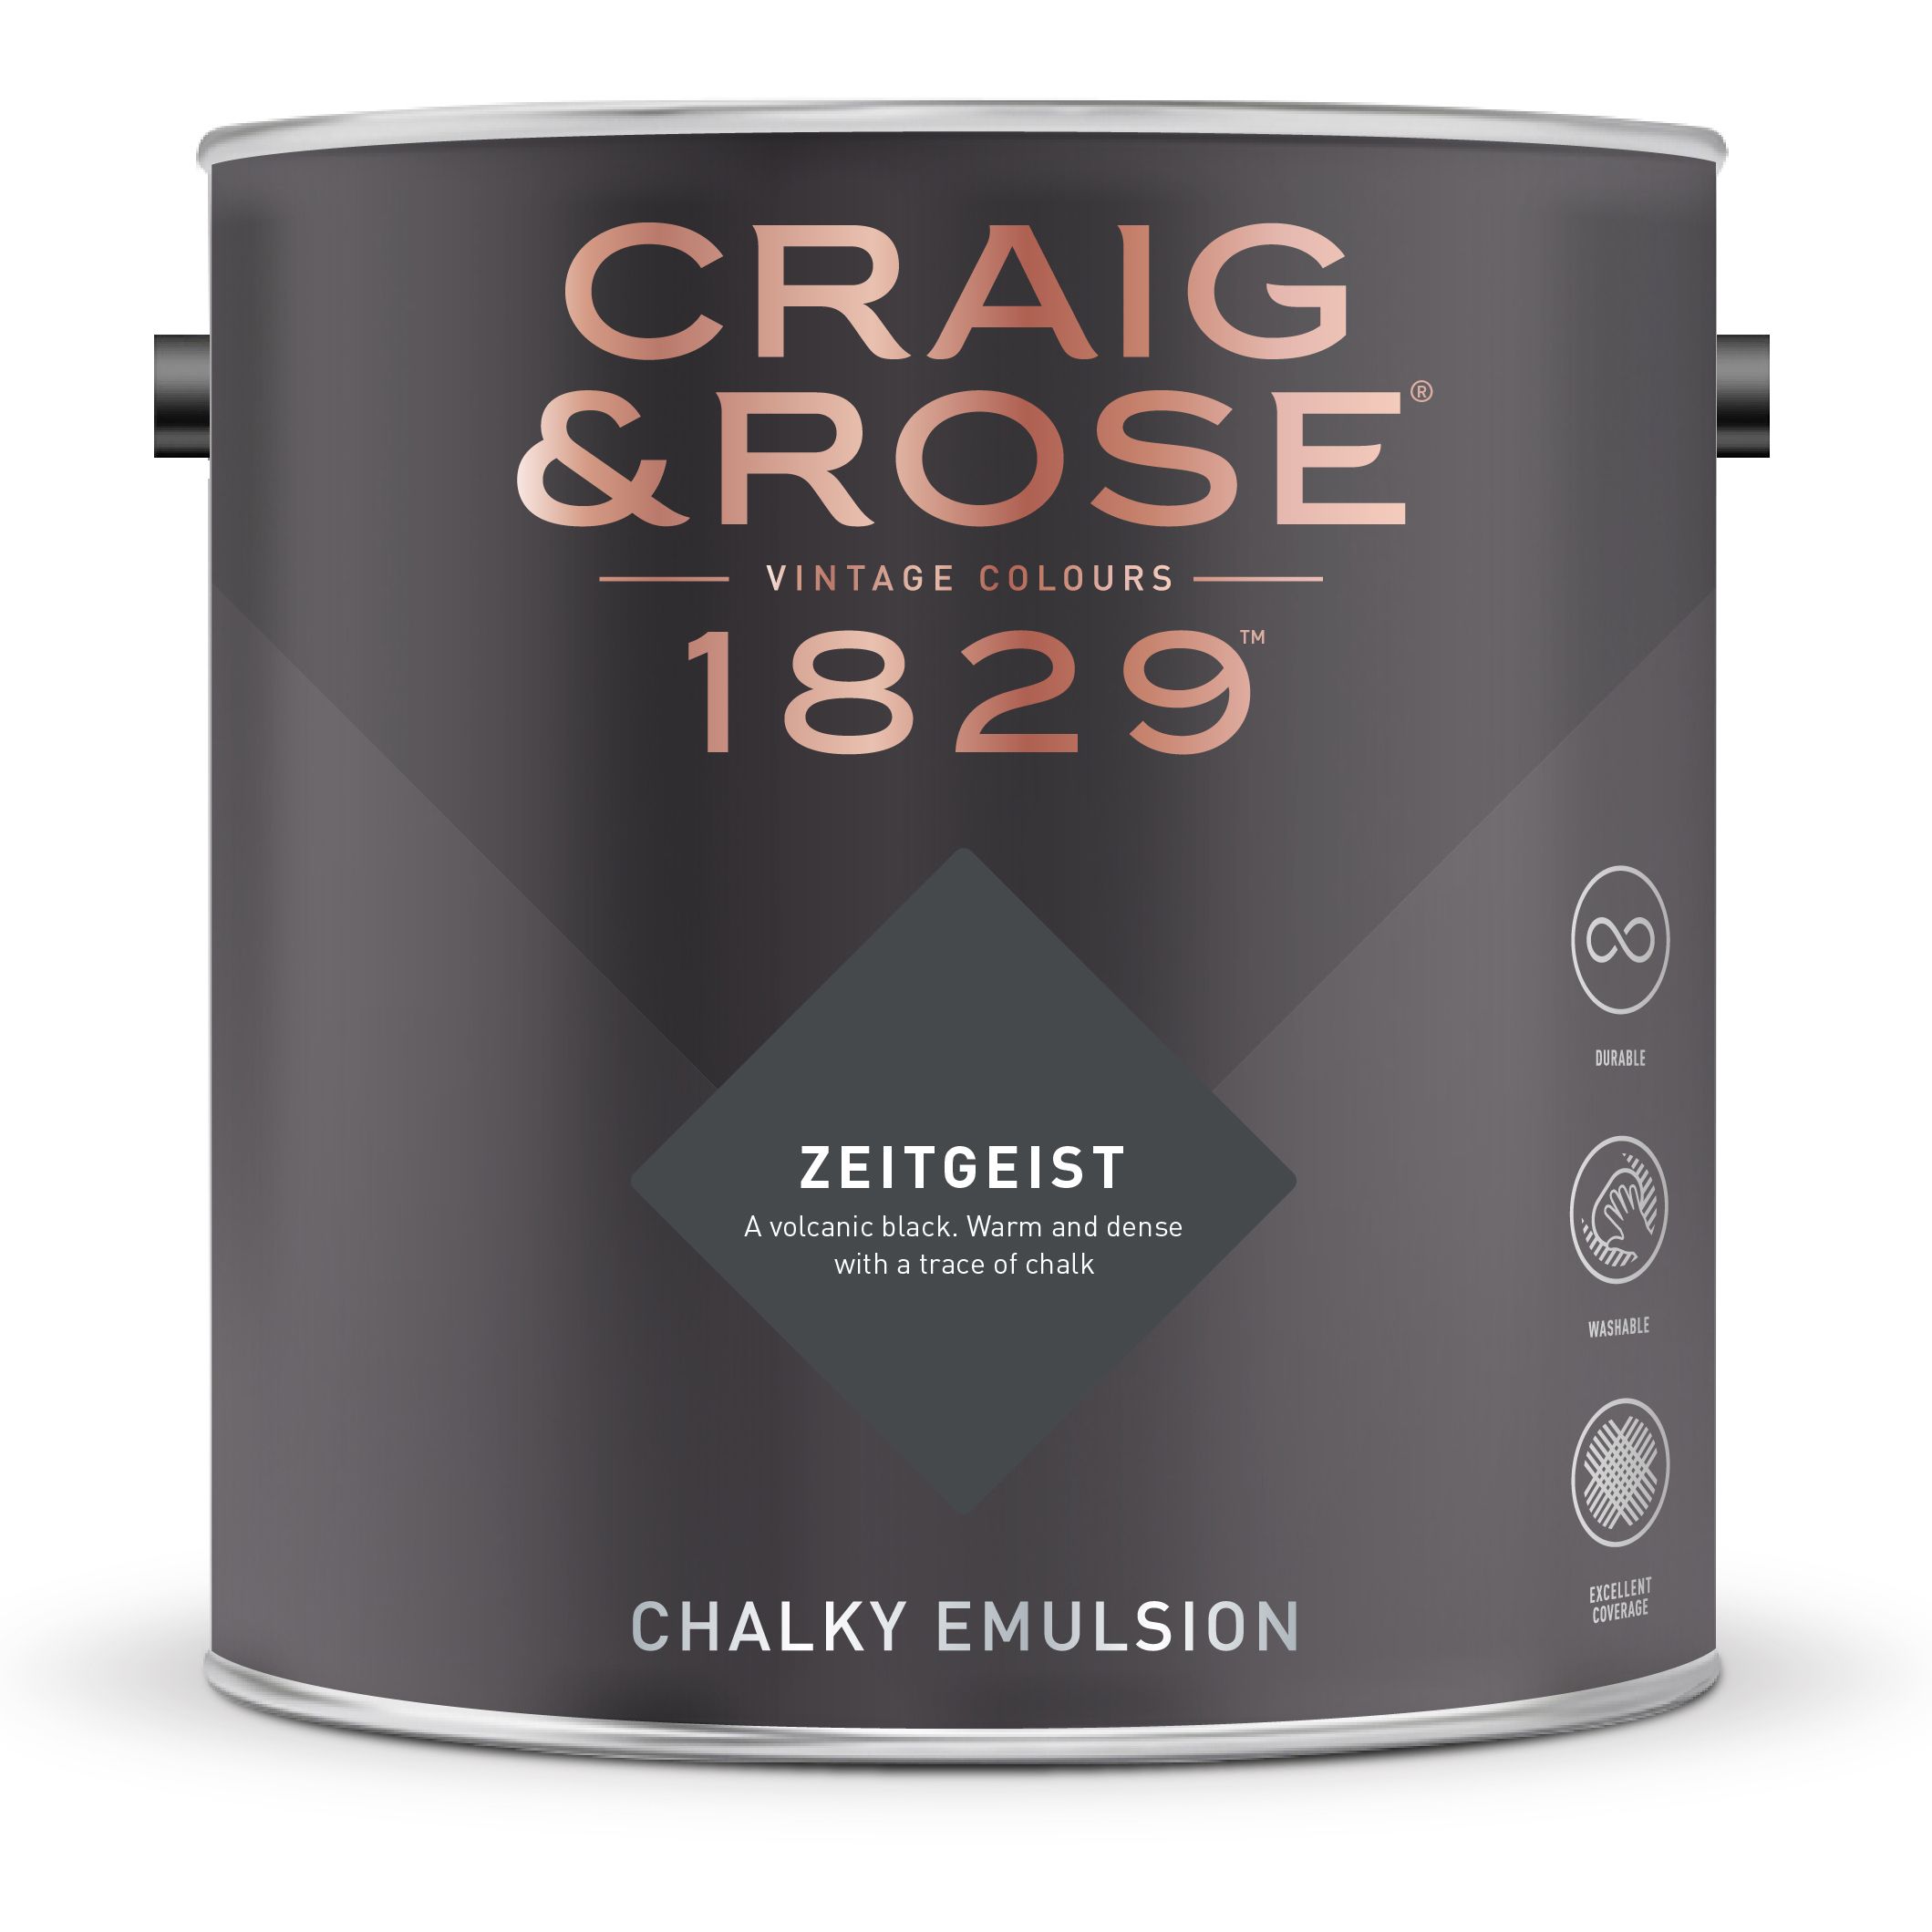 Craig & Rose 1829 Zeitgeist Chalky Emulsion paint, 2.5L